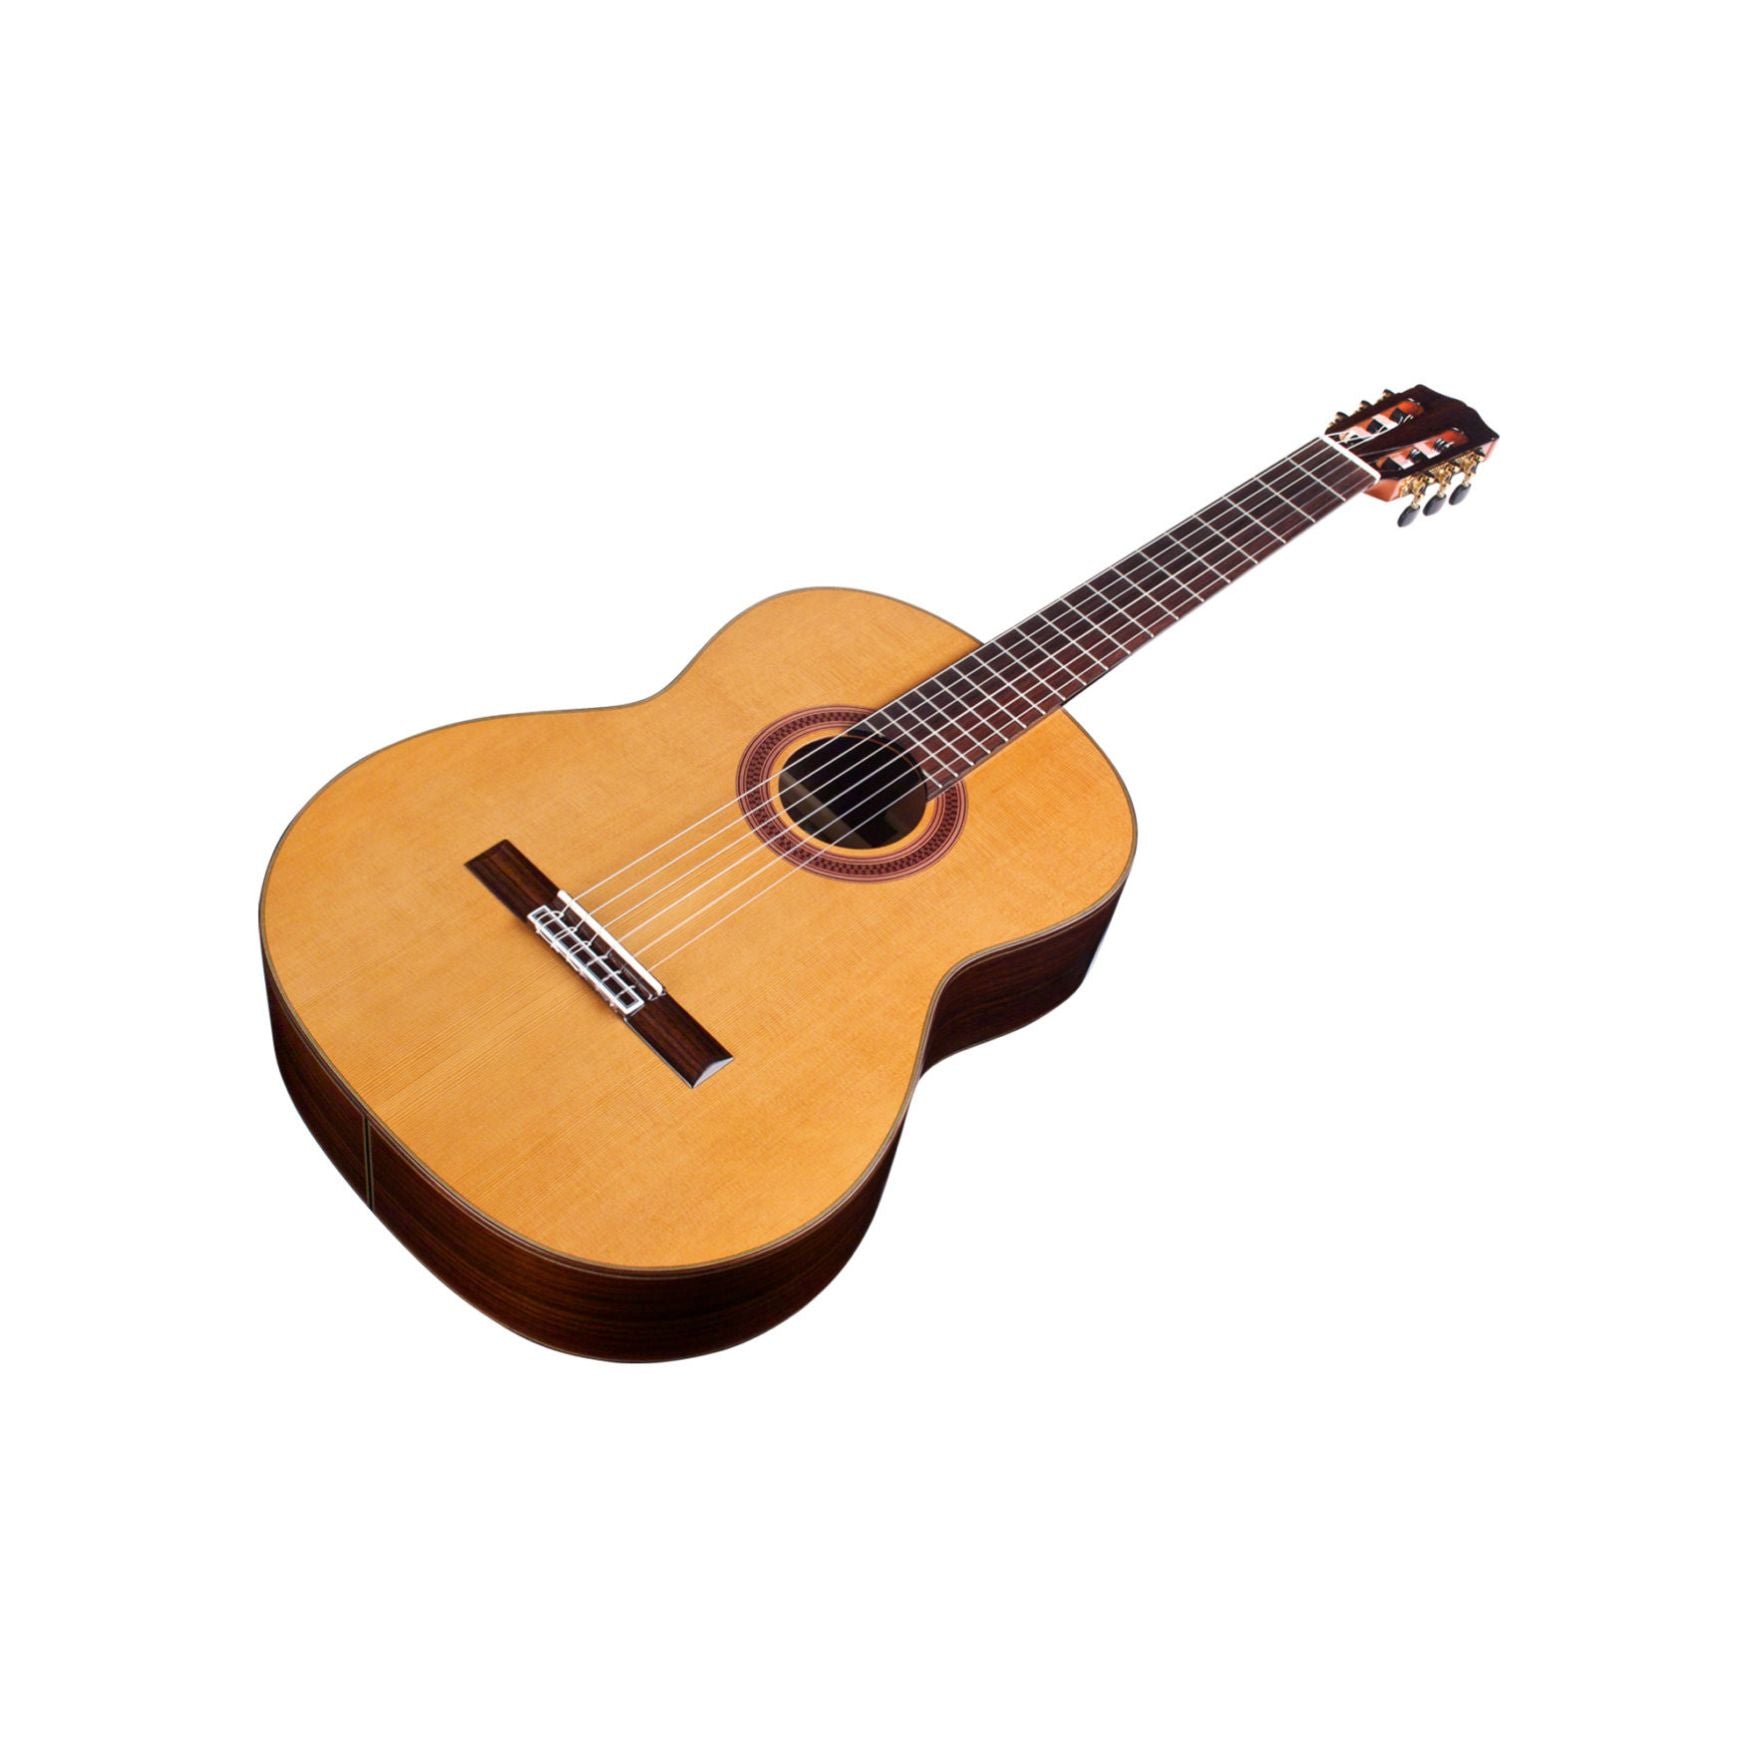 Cordoba C7 Nylon String Guitar, Cedar Top